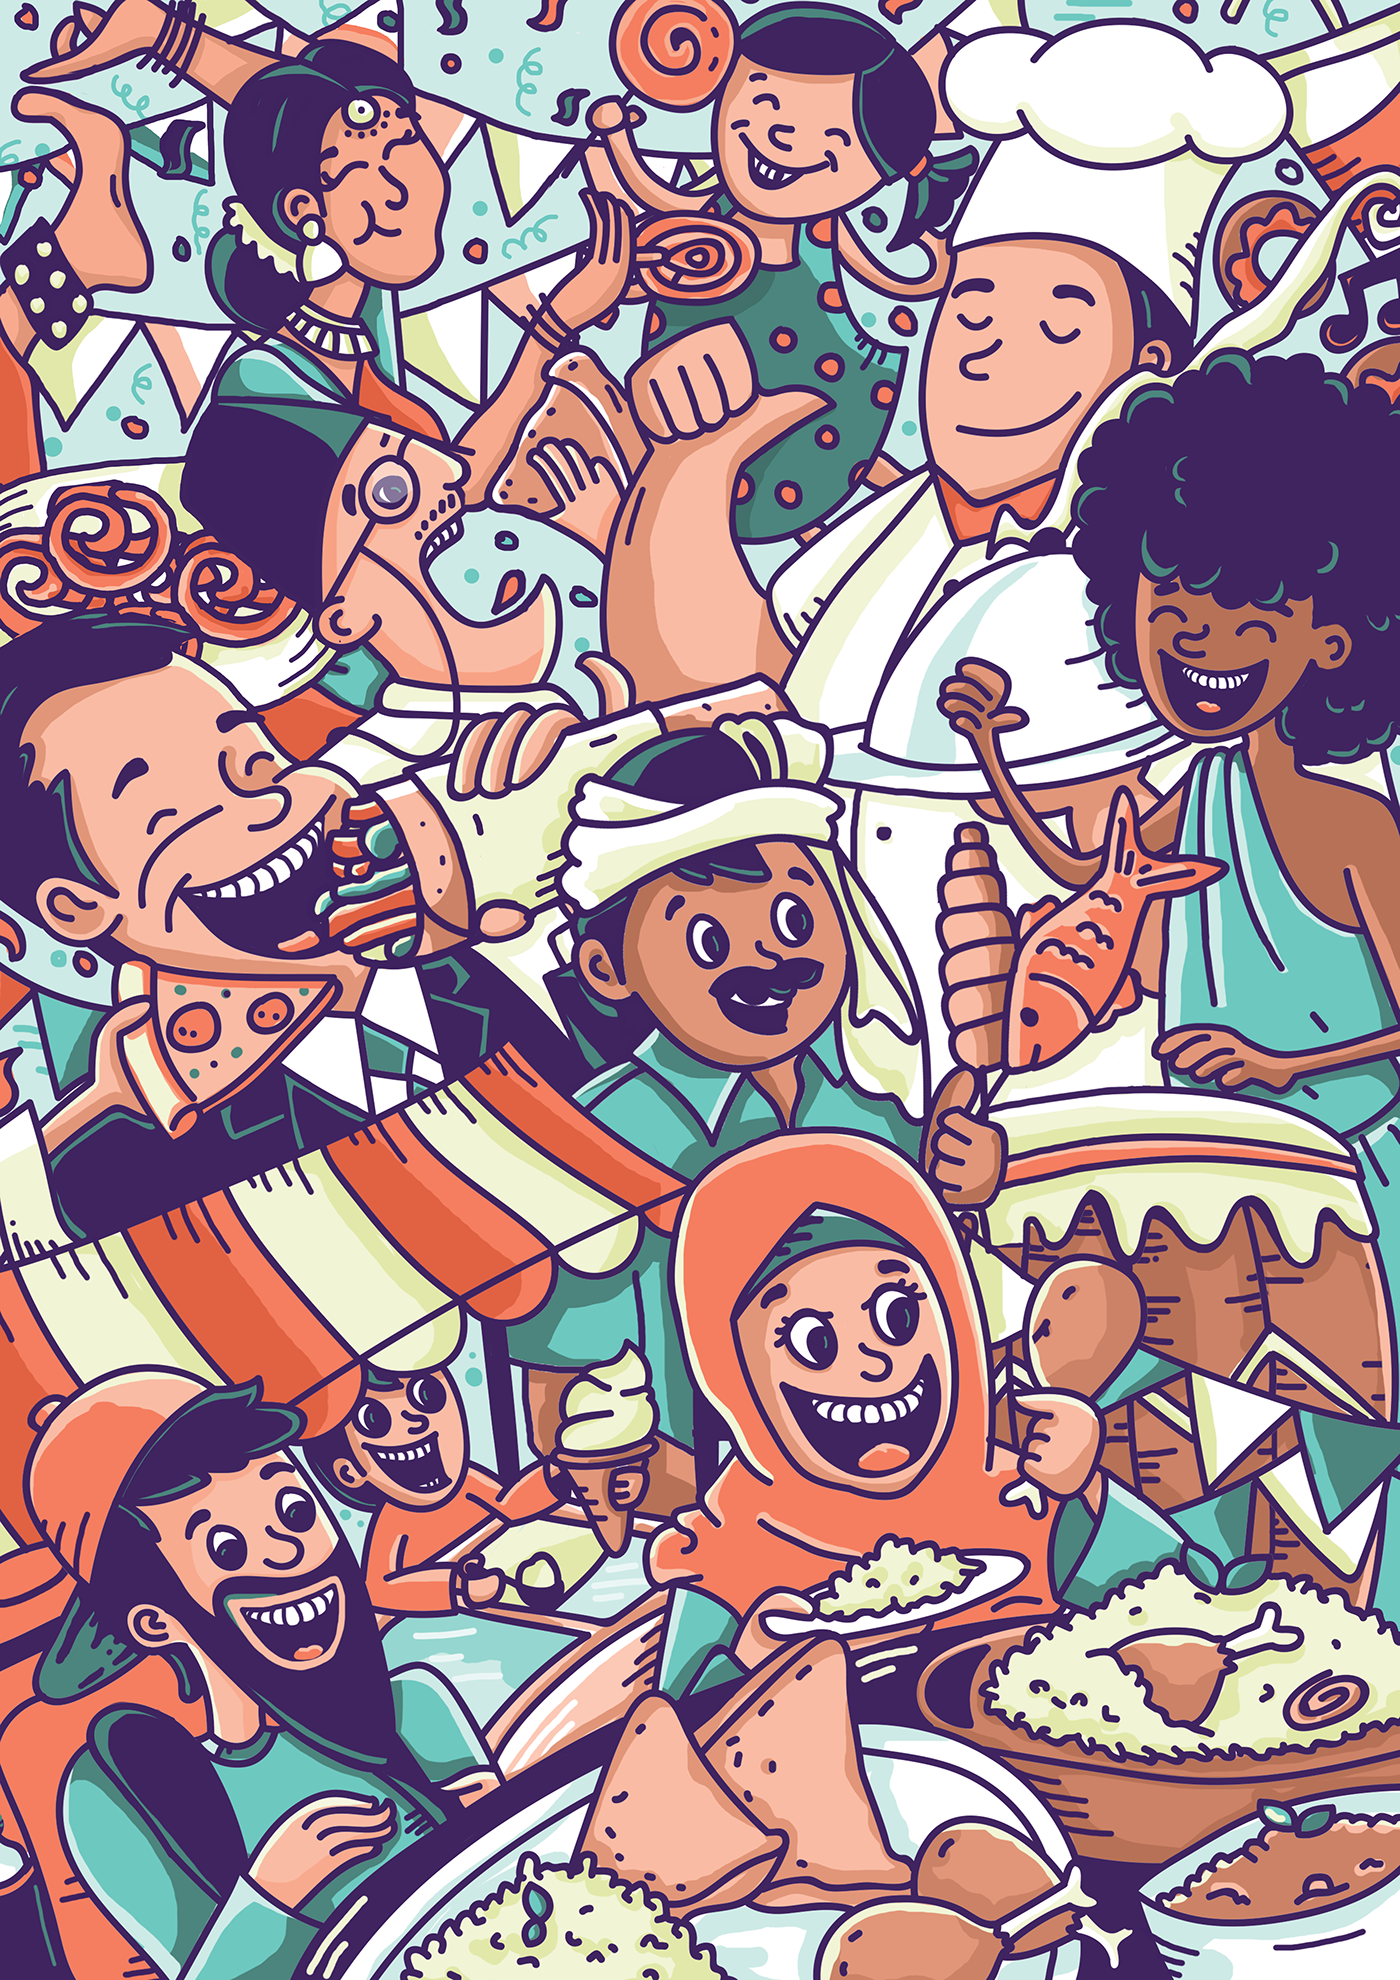 ILLUSTRATION  foodfestival foodies Modernart poster colors sharing doodle Vetcor kozhikode